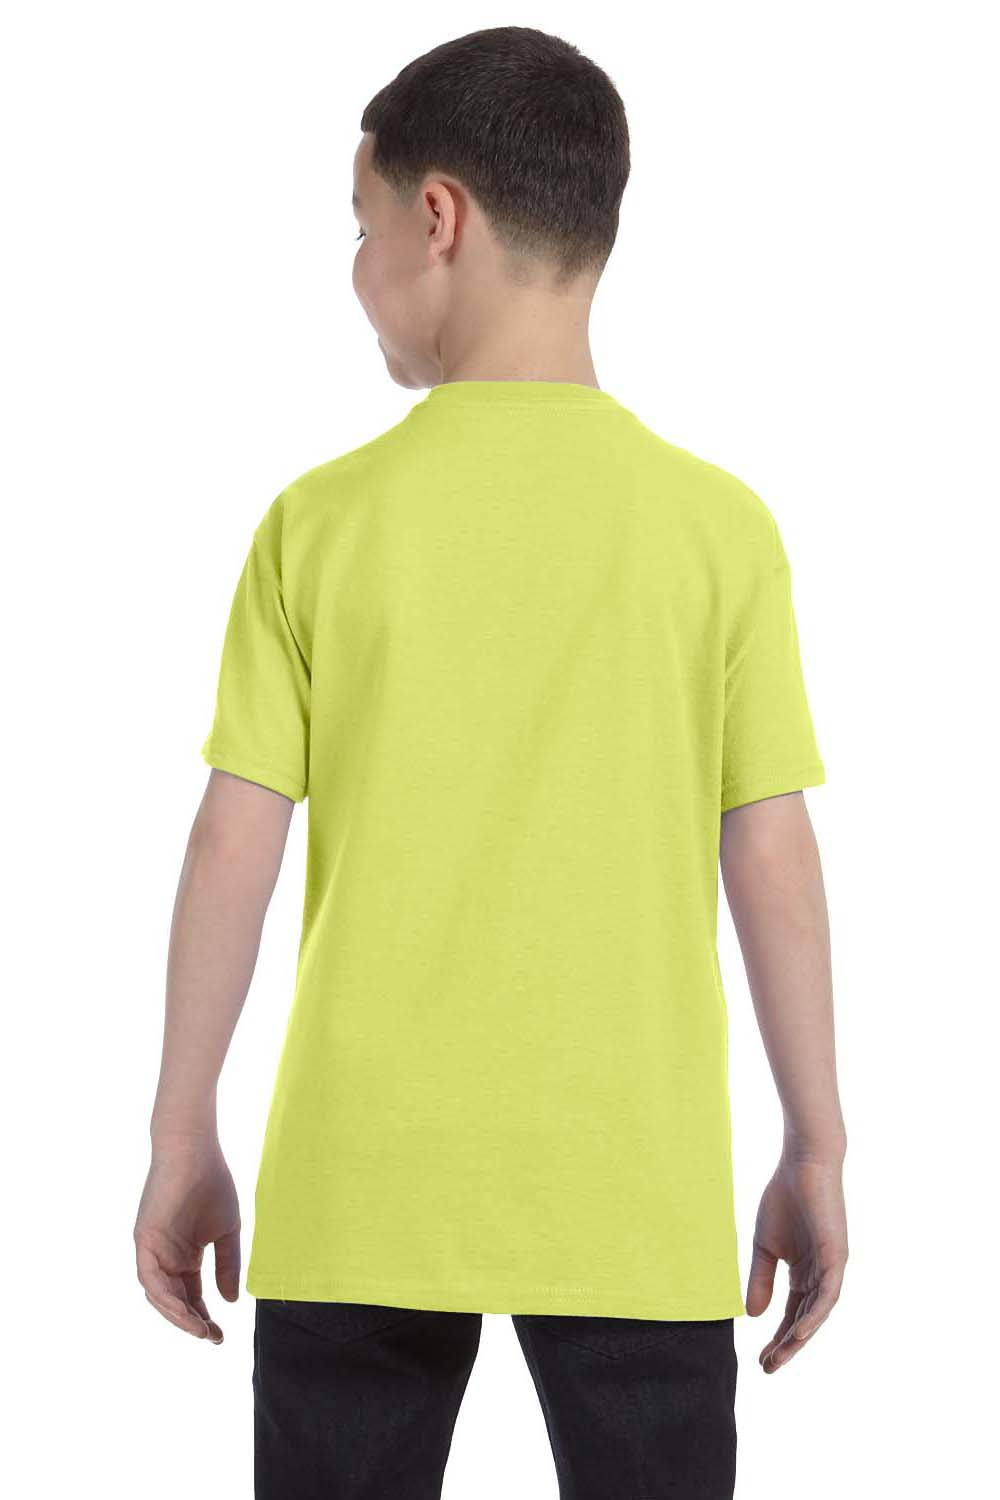 Jerzees 29B Youth Dri-Power Moisture Wicking Short Sleeve Crewneck T-Shirt Safety Green Back